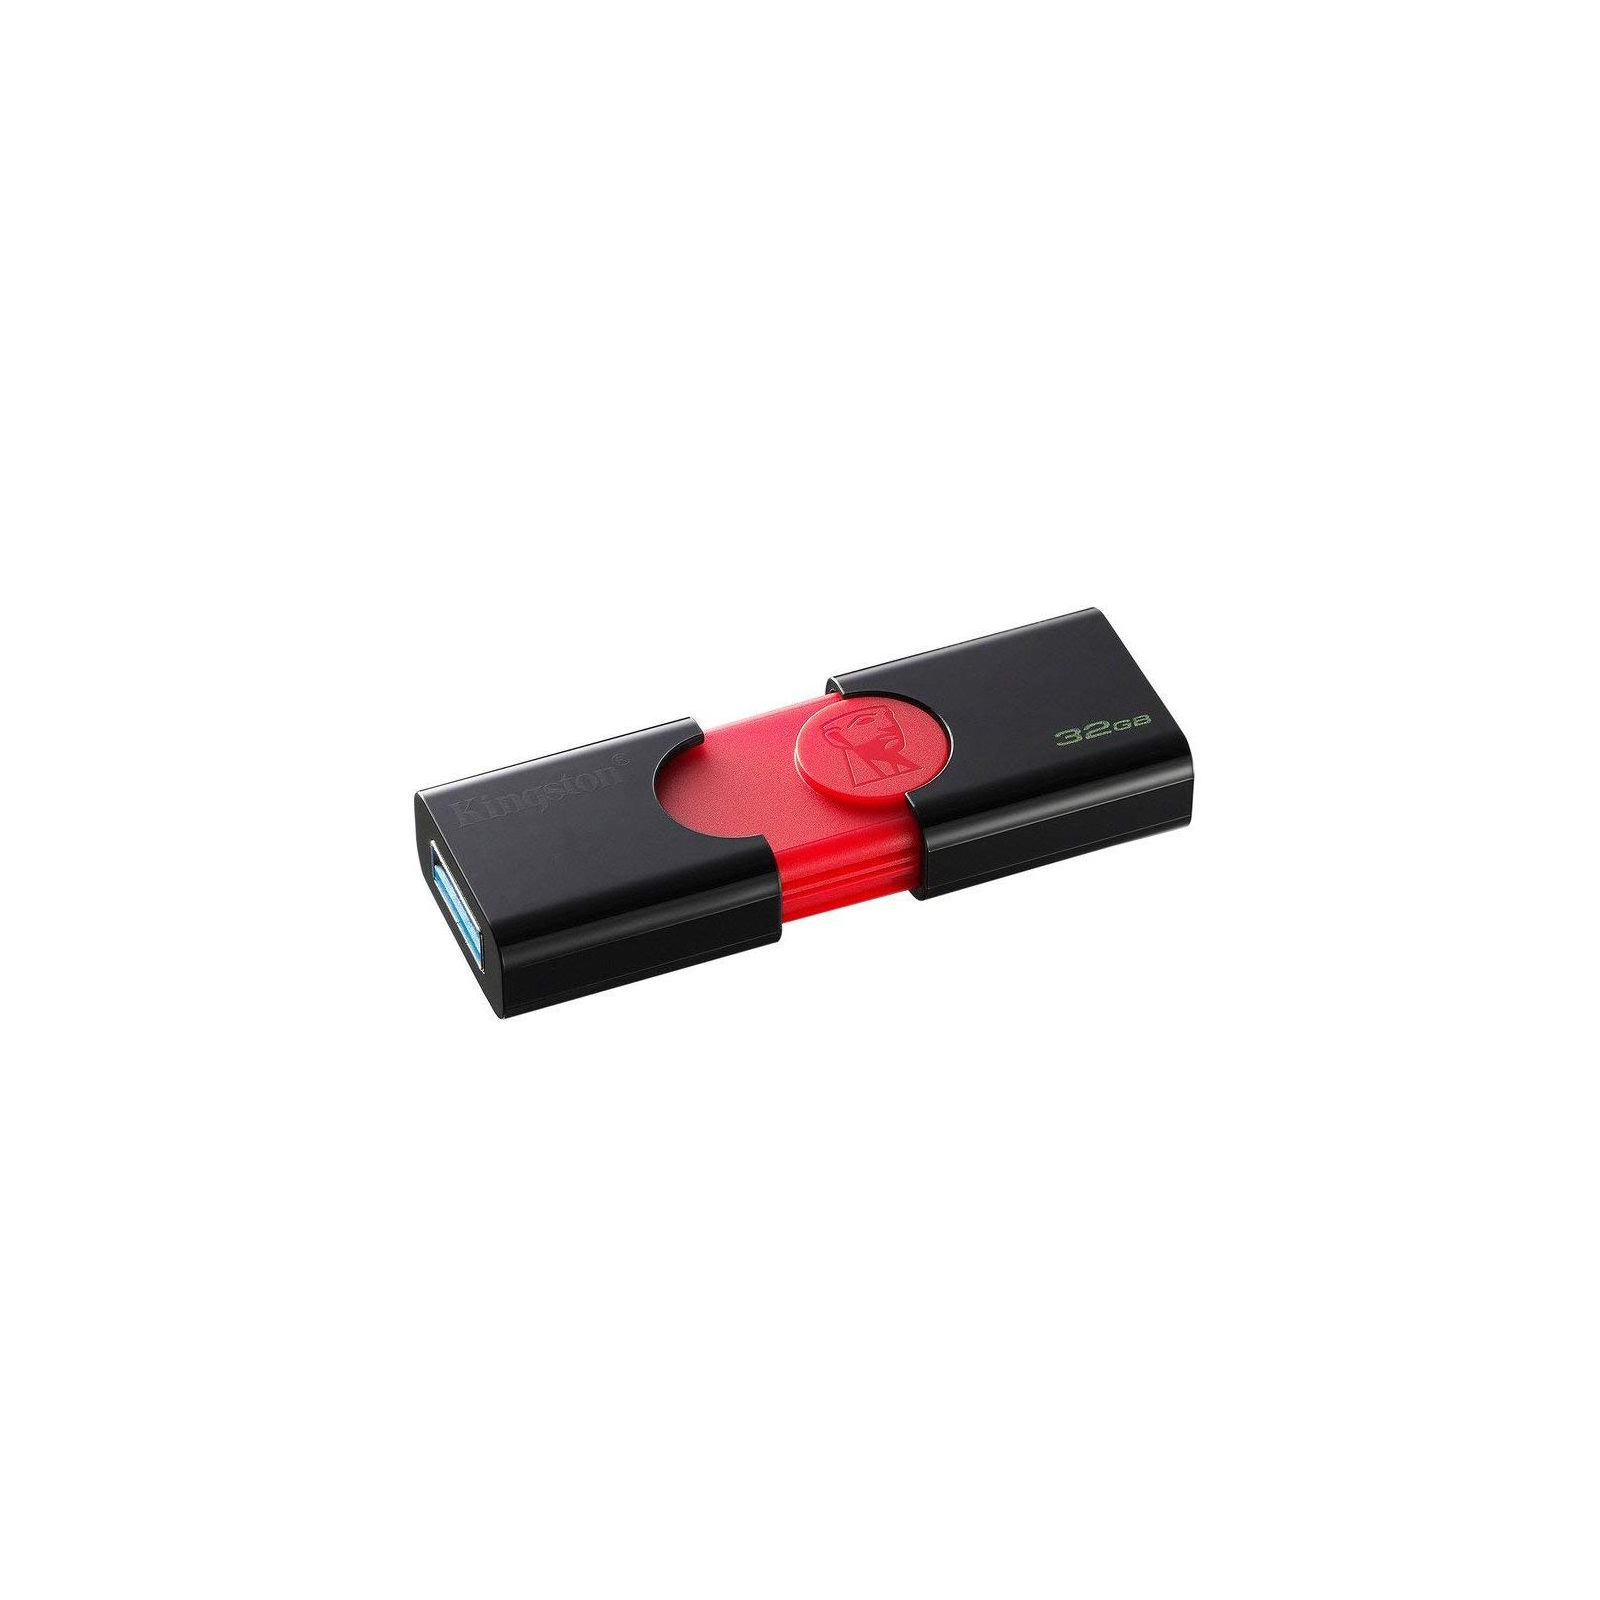 USB флеш накопитель Kingston 256GB DT106 USB 3.0 (DT106/256GB) изображение 5